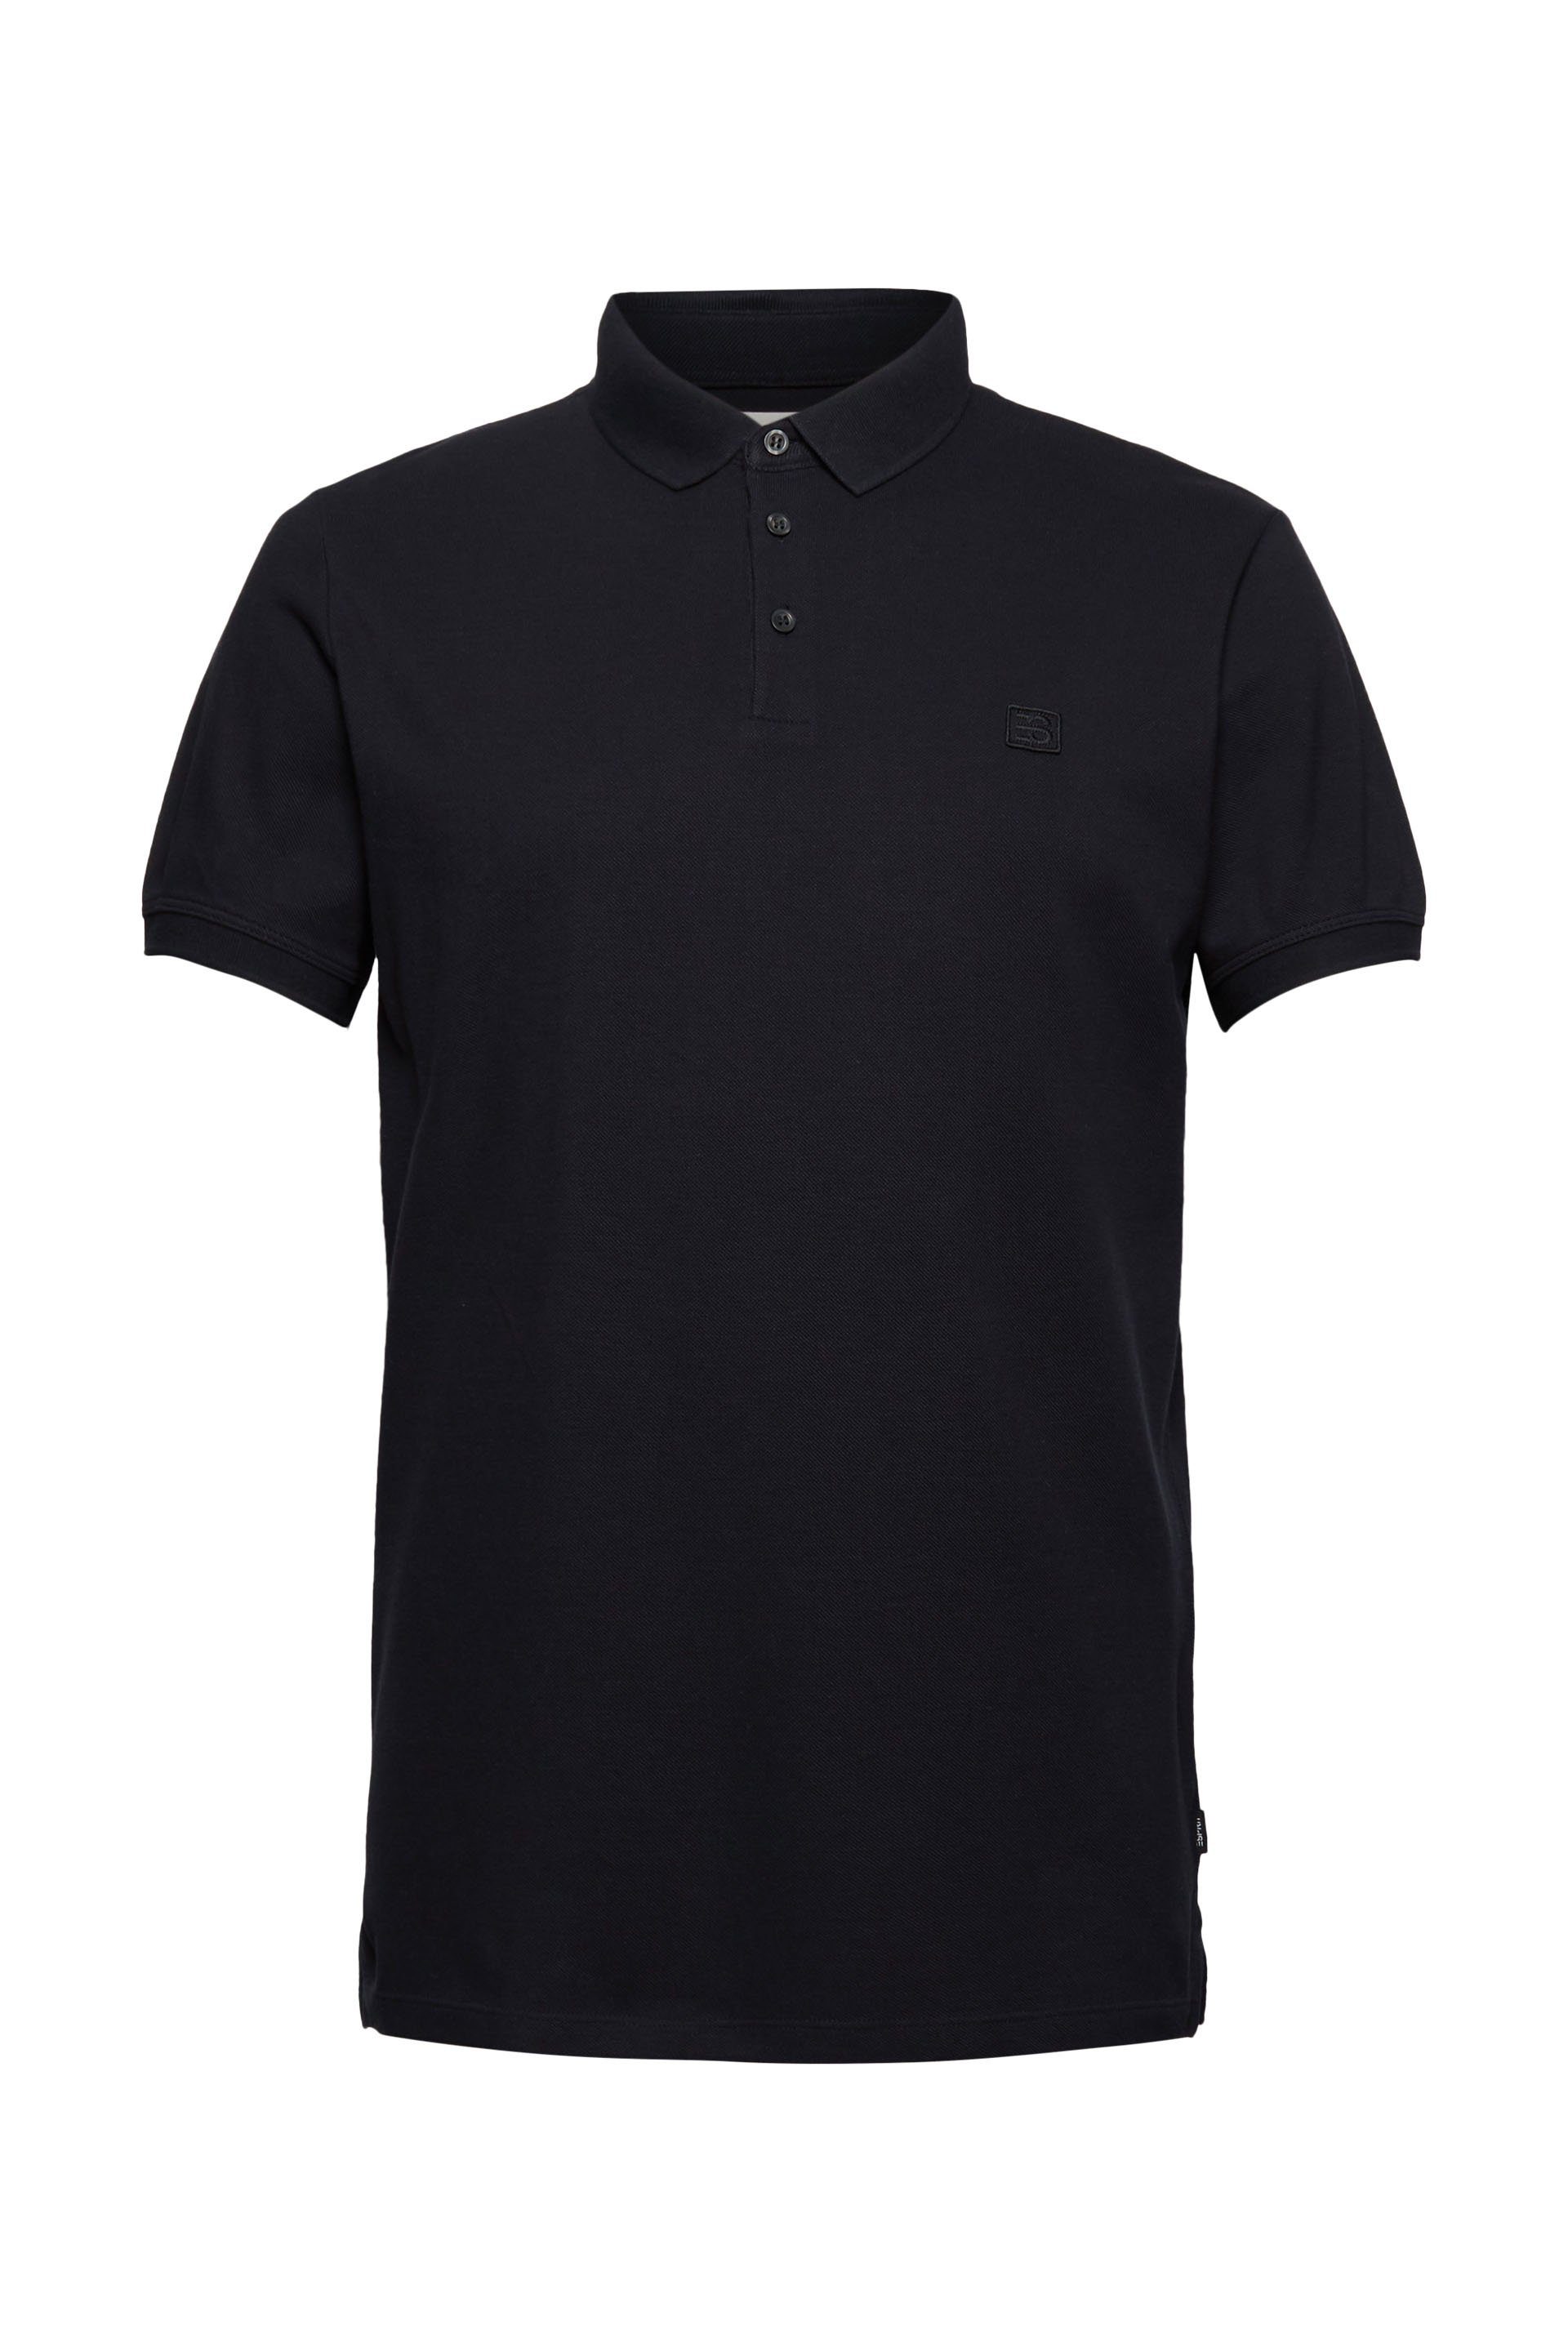 Esprit Poloshirt black | Poloshirts